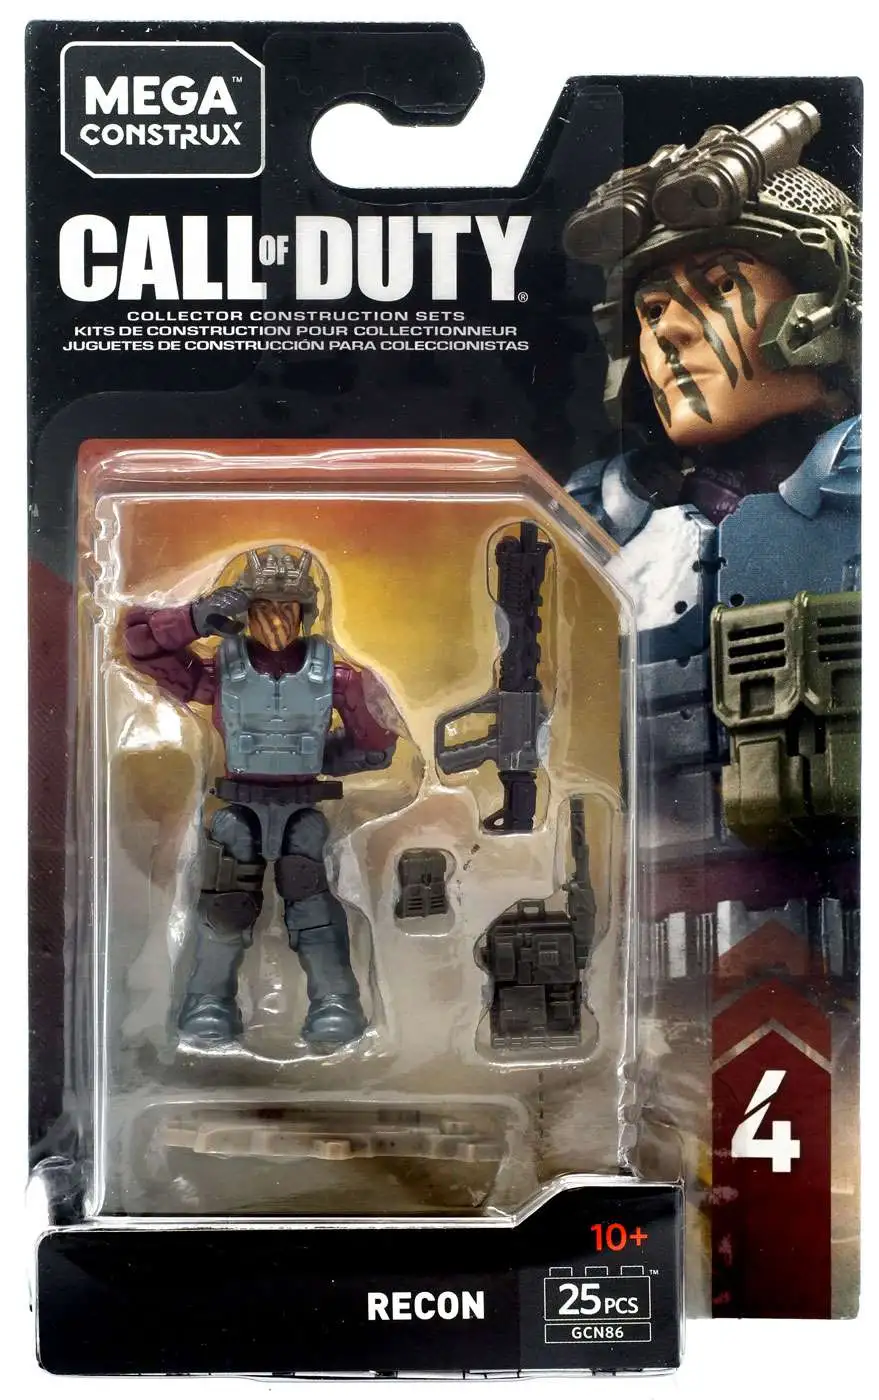 Call of Duty Mega Construx Series 4 "Captain Pelayo" Mini Figure In stock! 